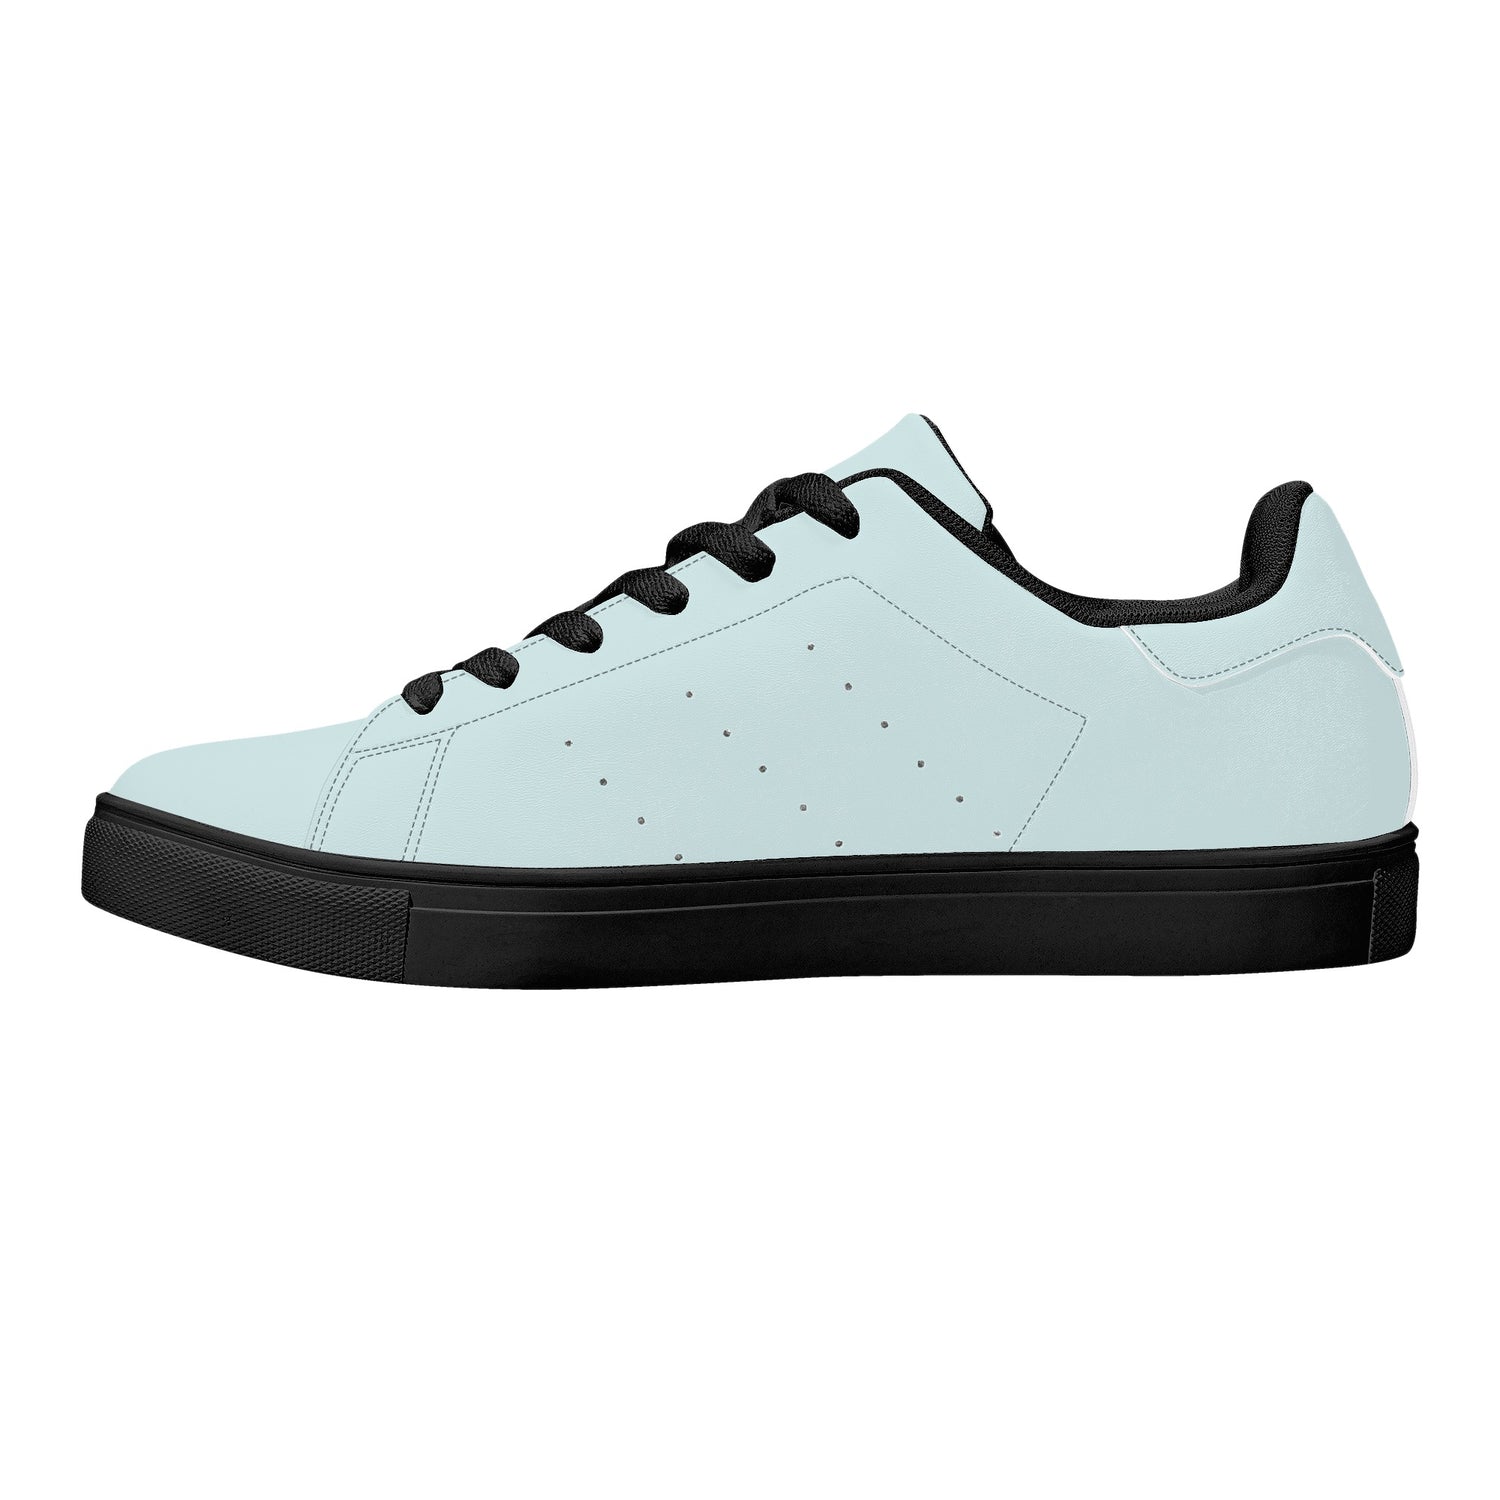 Maison Koly Bafula Bay Low Top Leather Sneakers- Sky blue - maisonkoly.com